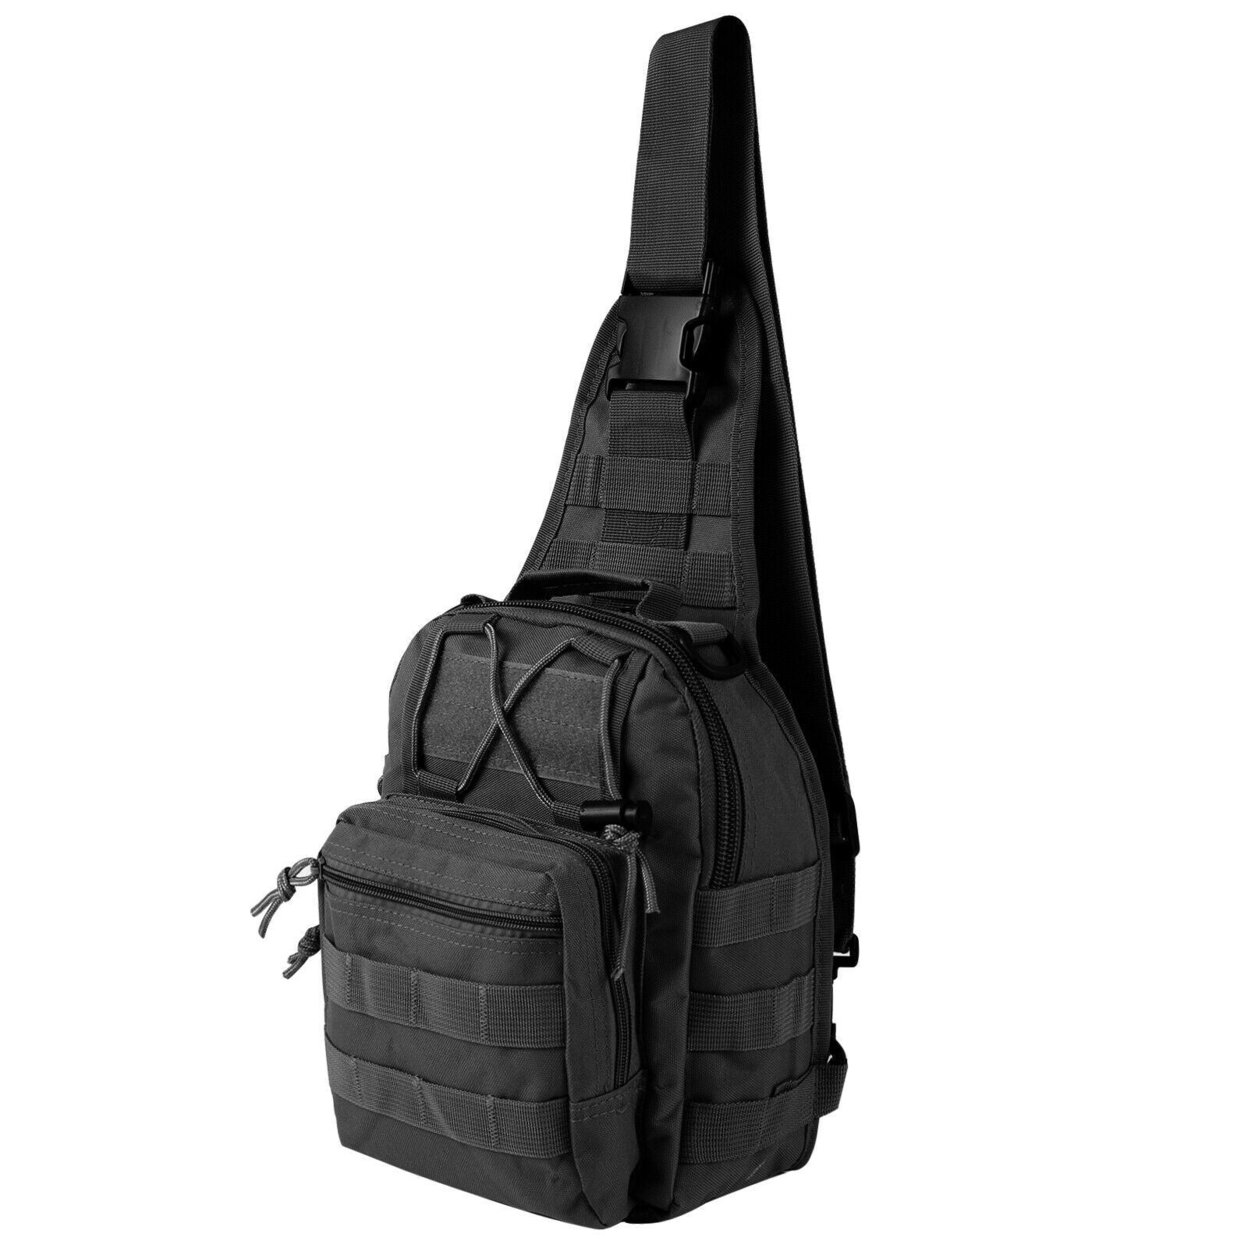 SKUSHOPS Men Outdoor Tactical Backpack